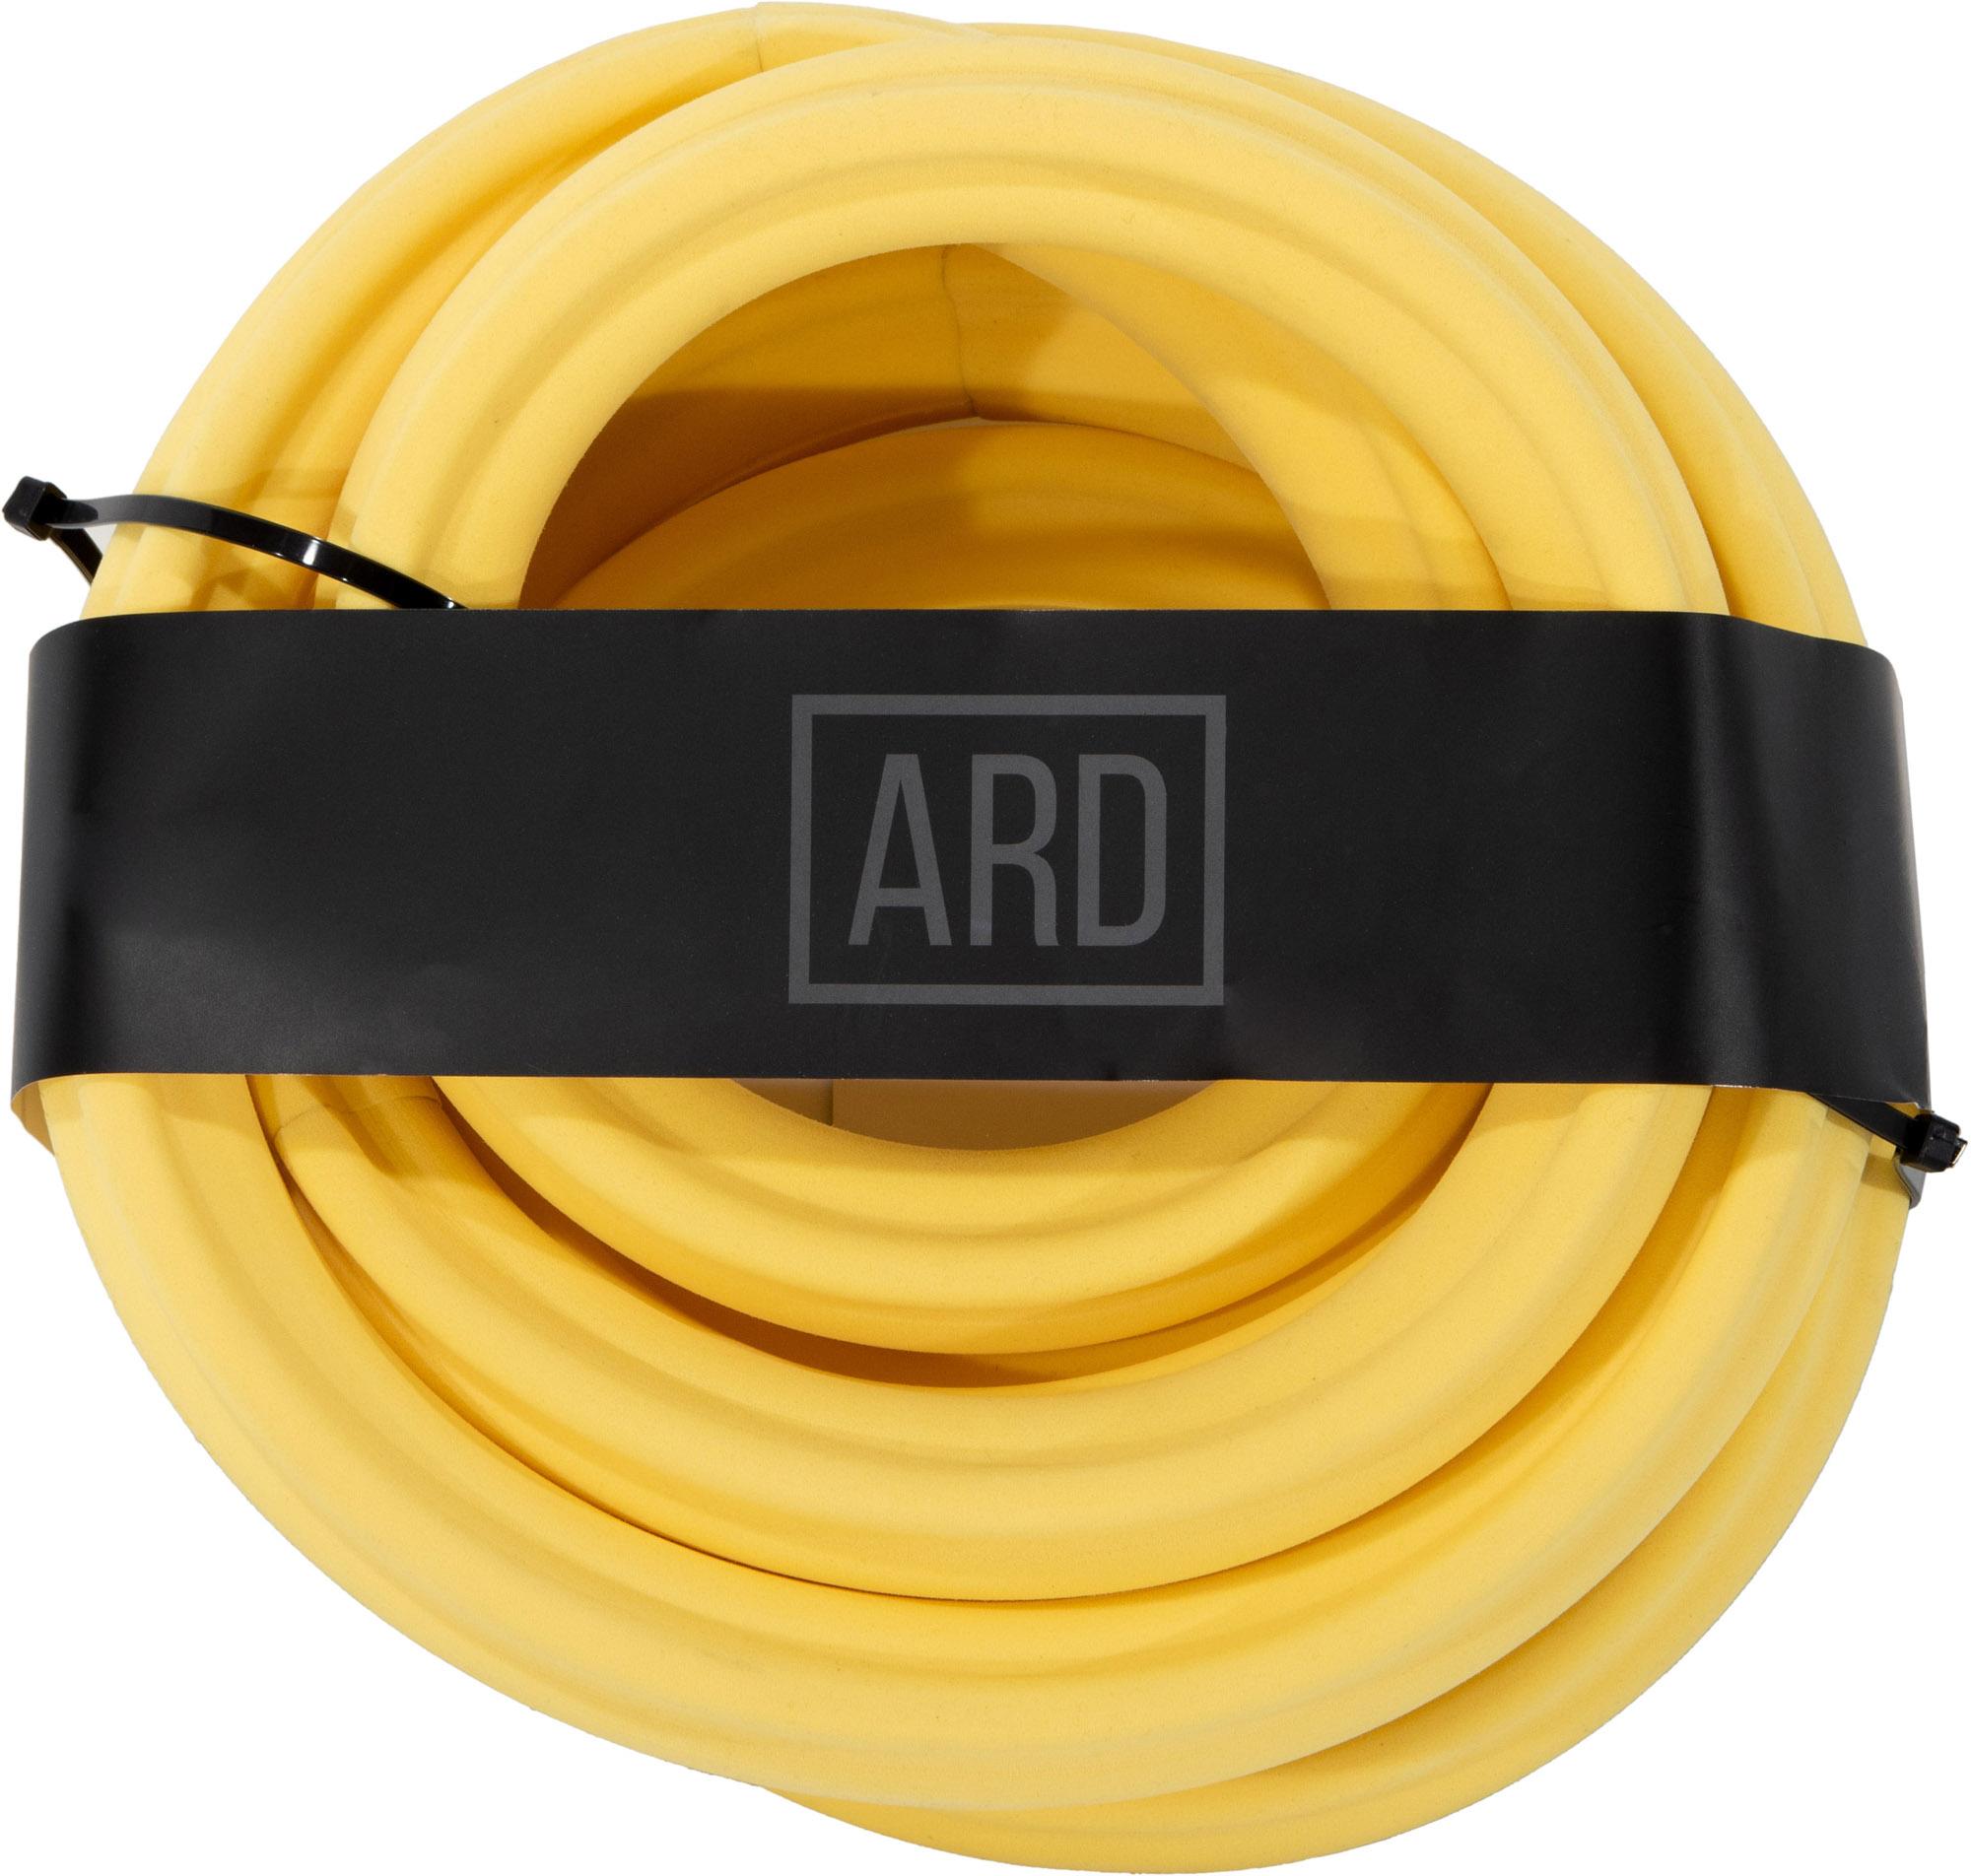 Nukeproof Horizon Advanced Rim Defence - Ard Pair - Yellow